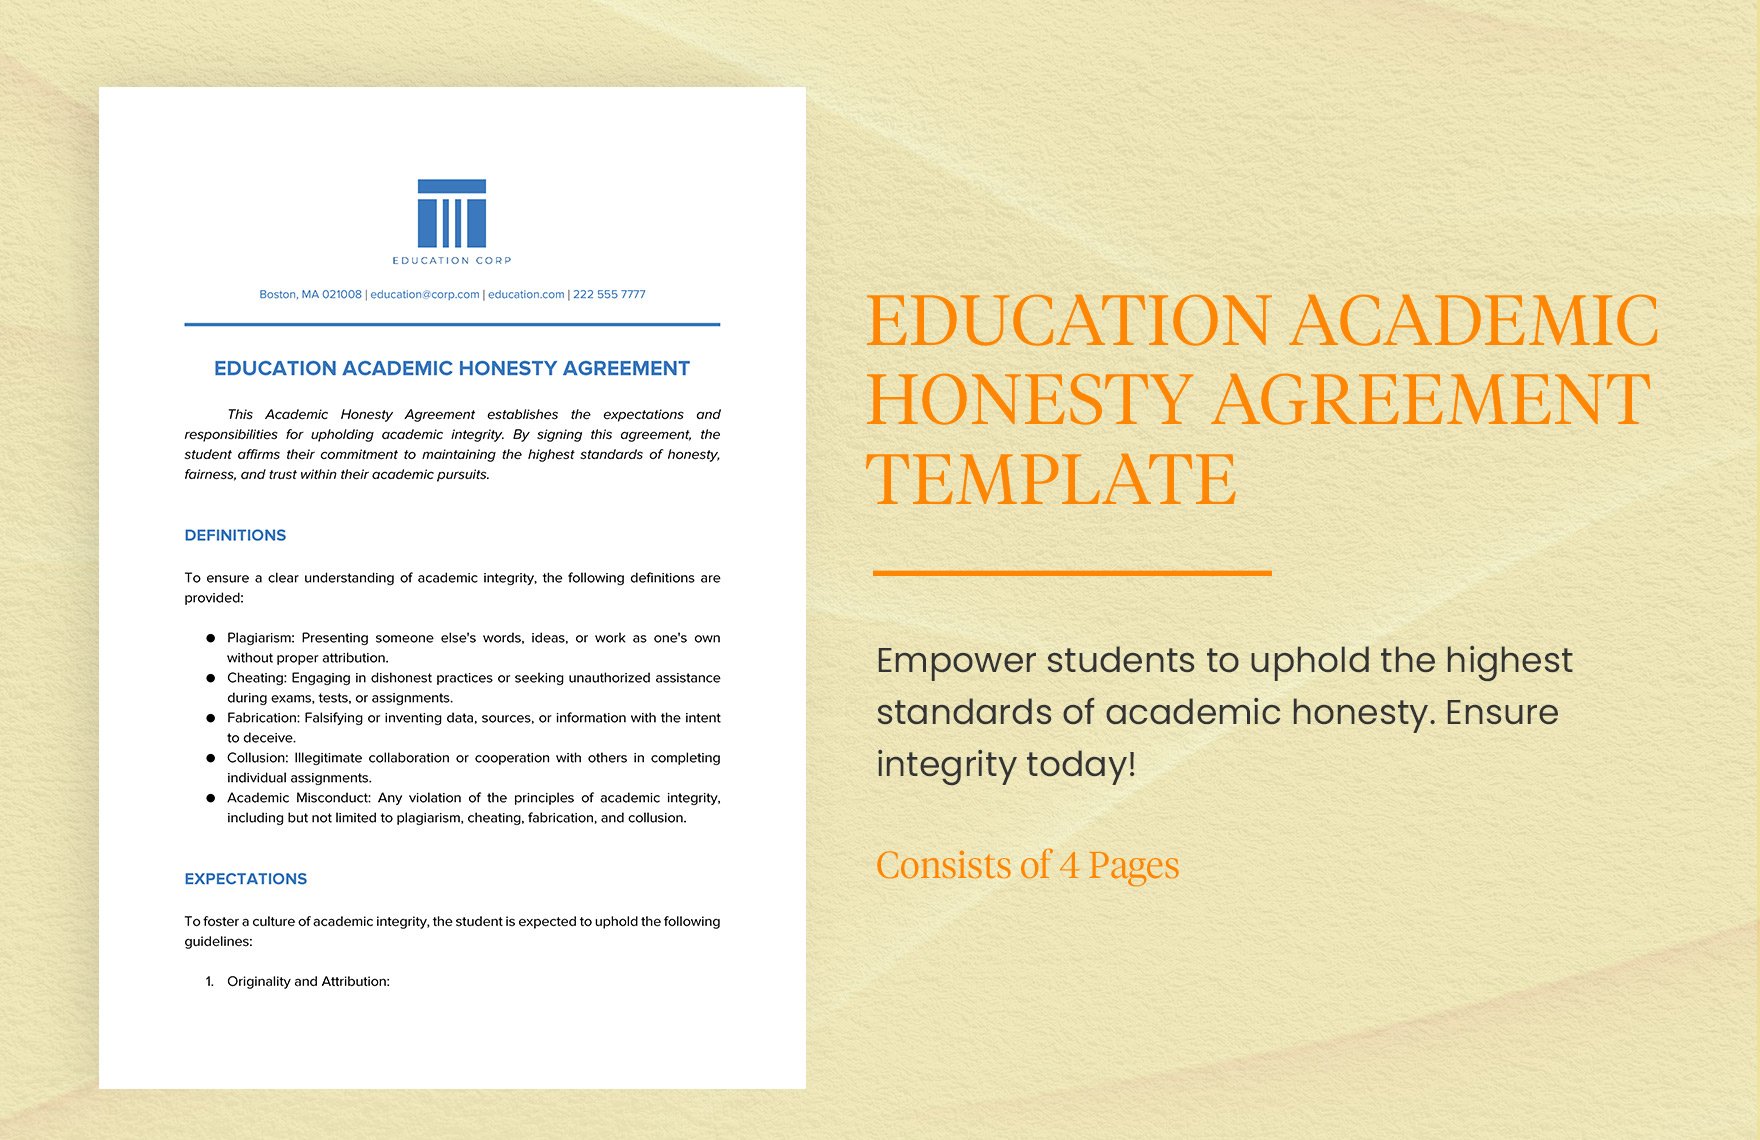 Education Academic Honesty Agreement Template